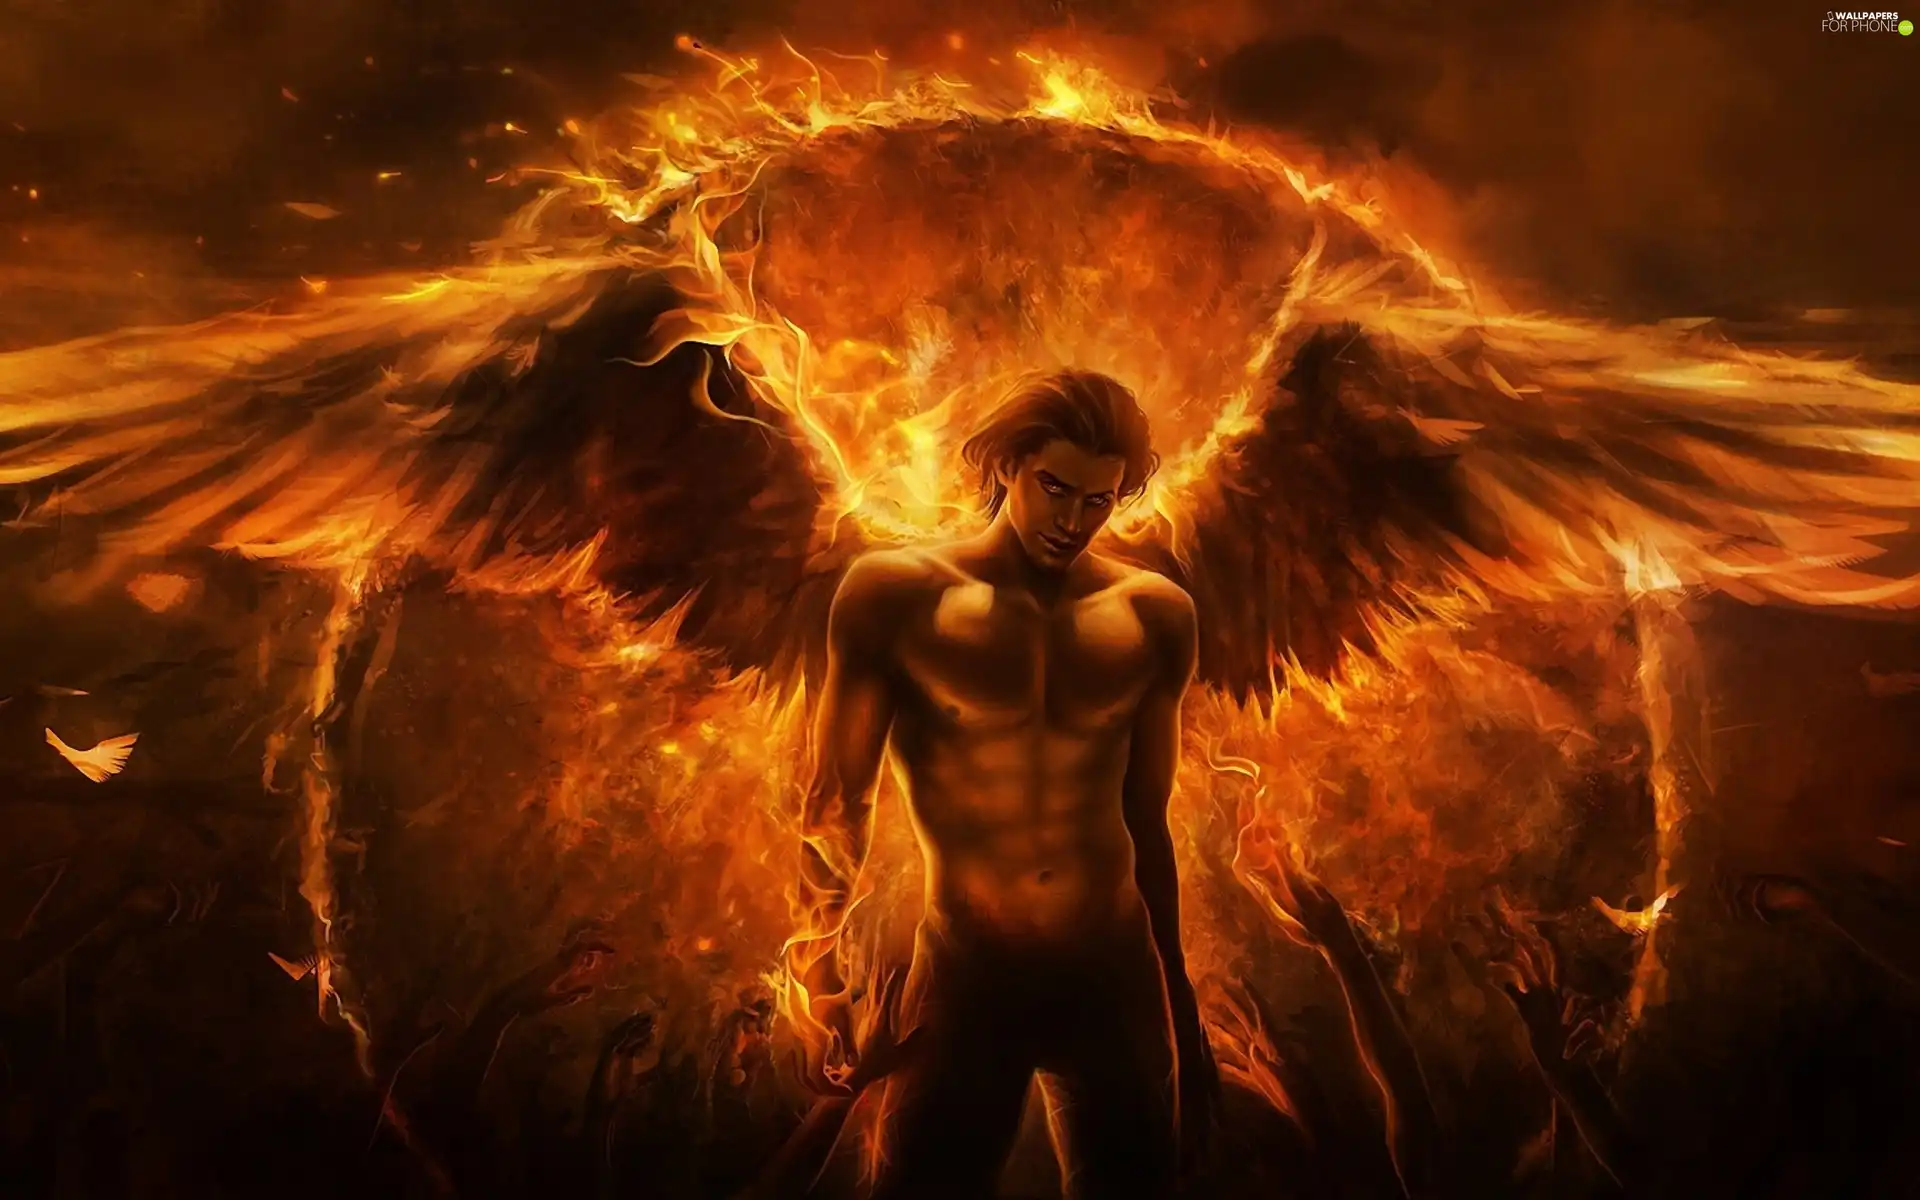 Big Fire, a man, wings